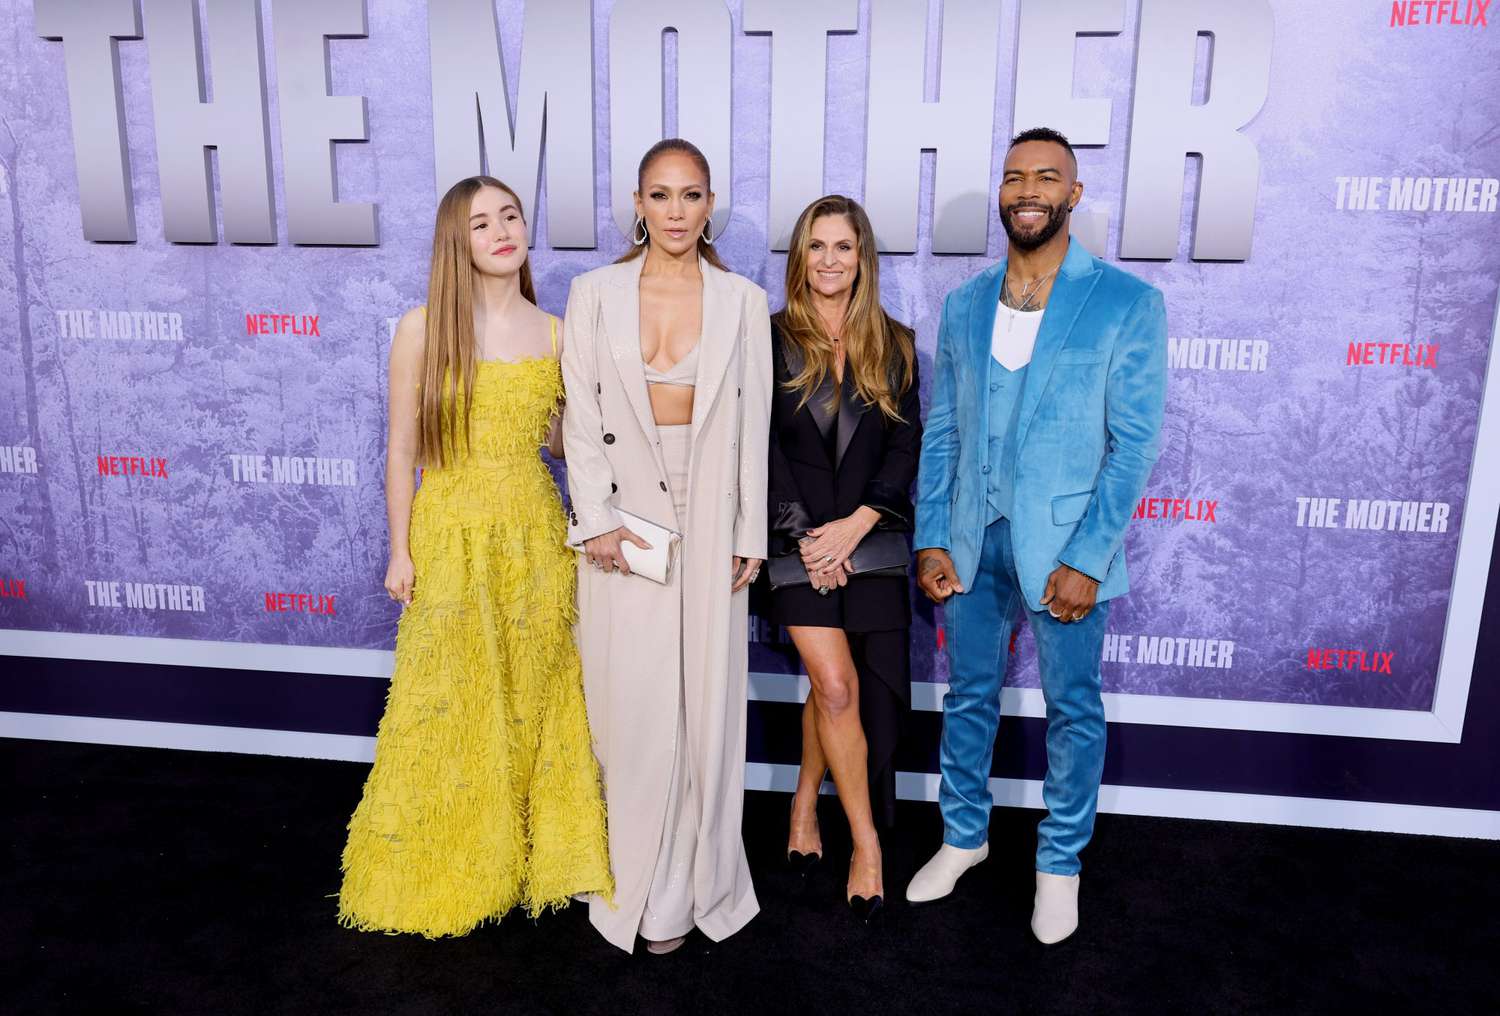 Jennifer Lopez, Lucy Paez, Omari Hardwick, and director Niki Caro at "The Mother" premiere.